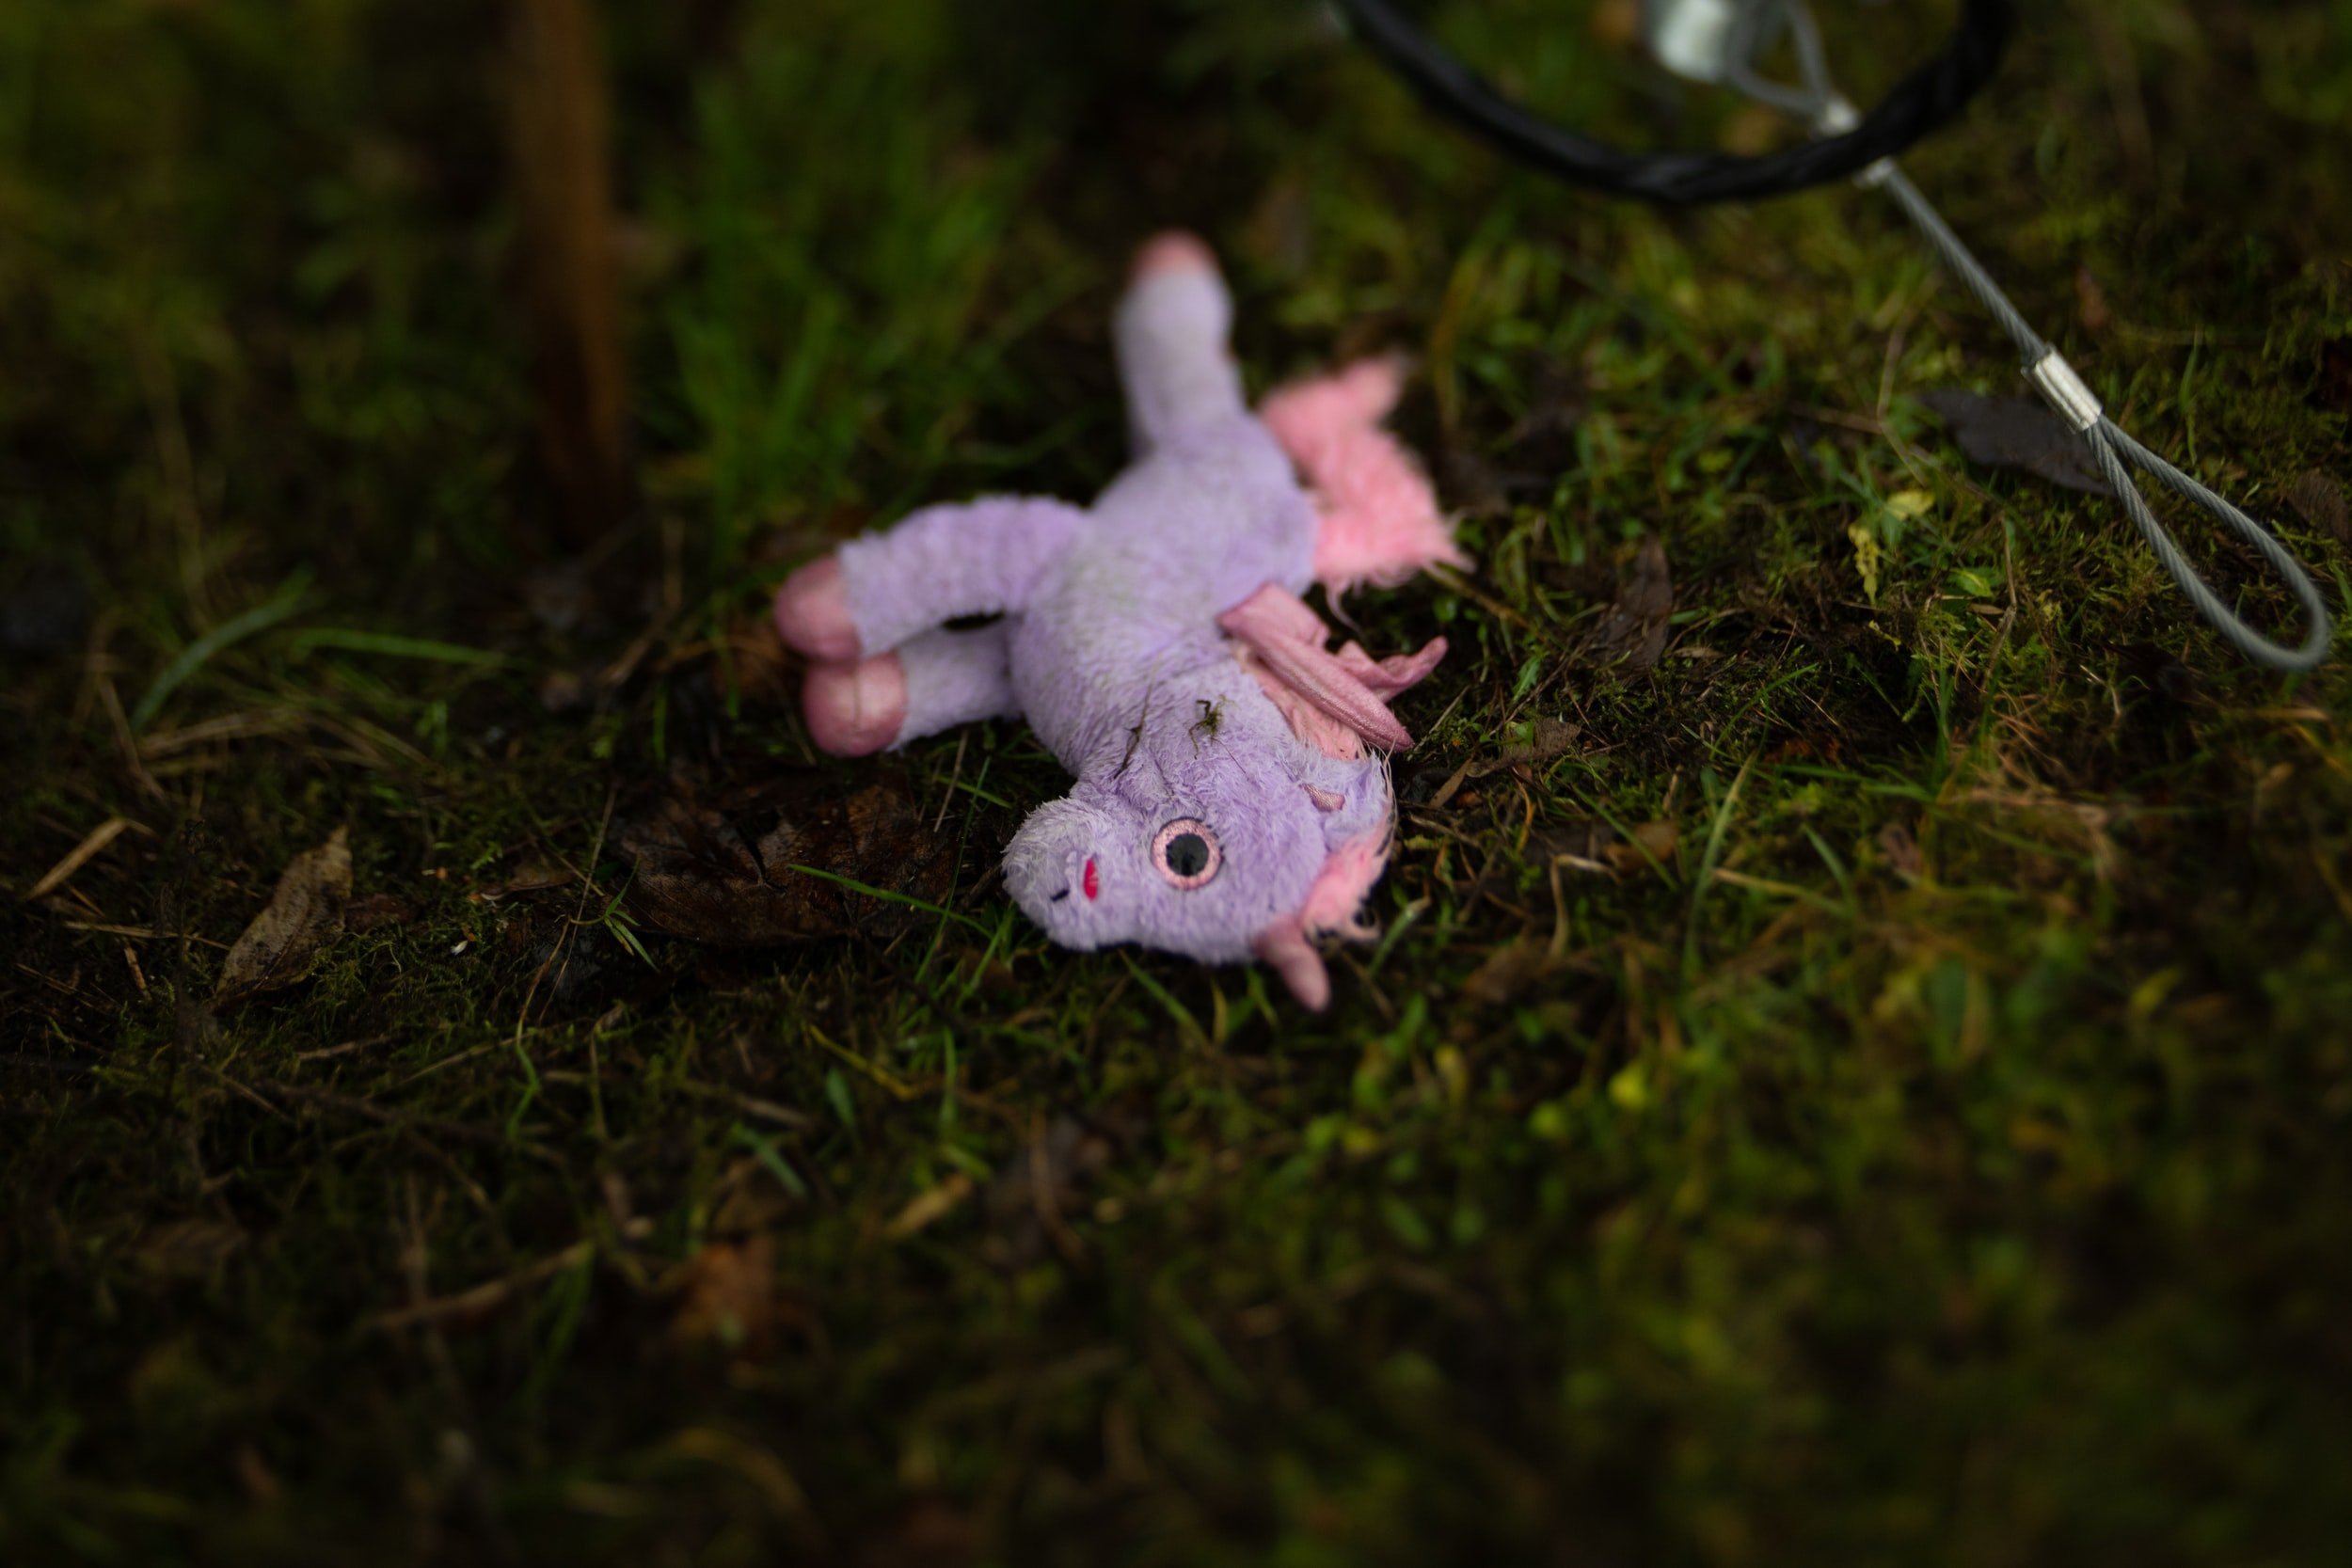 Plush unicorn laid out on grass